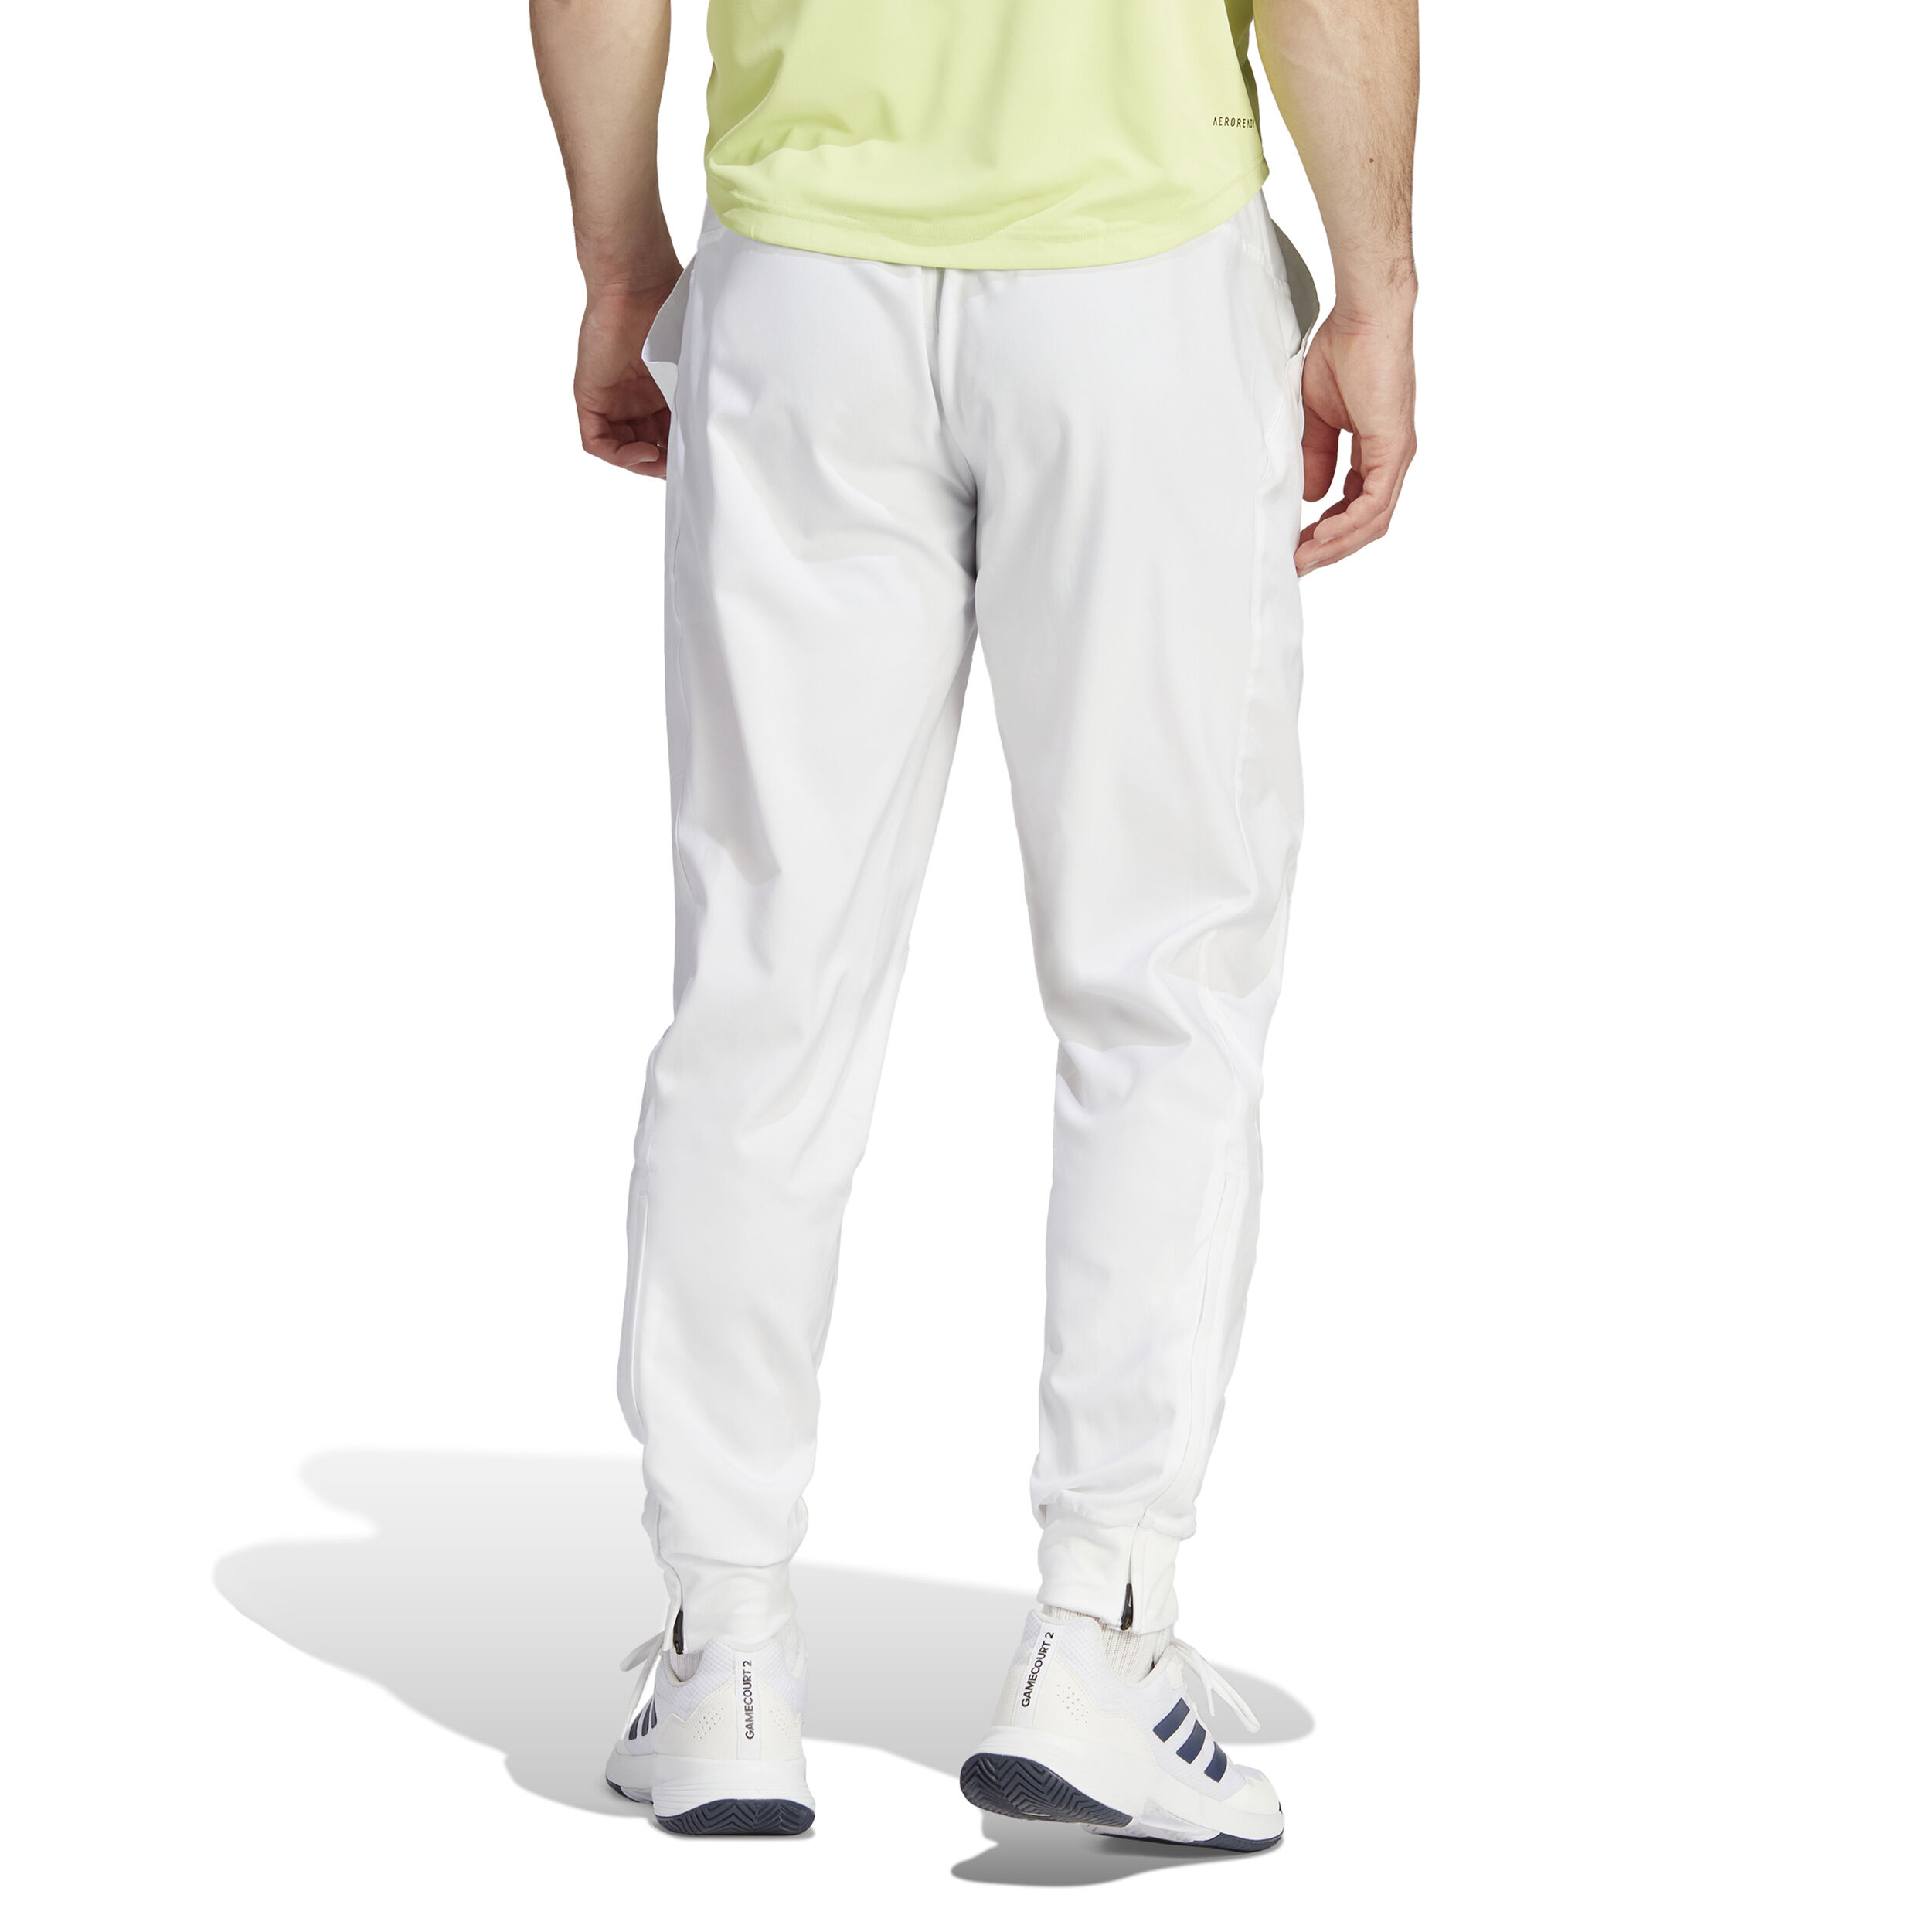 Original Adidas Pants for Men Size US XL, UK 15-16Y, Men's Fashion,  Activewear on Carousell